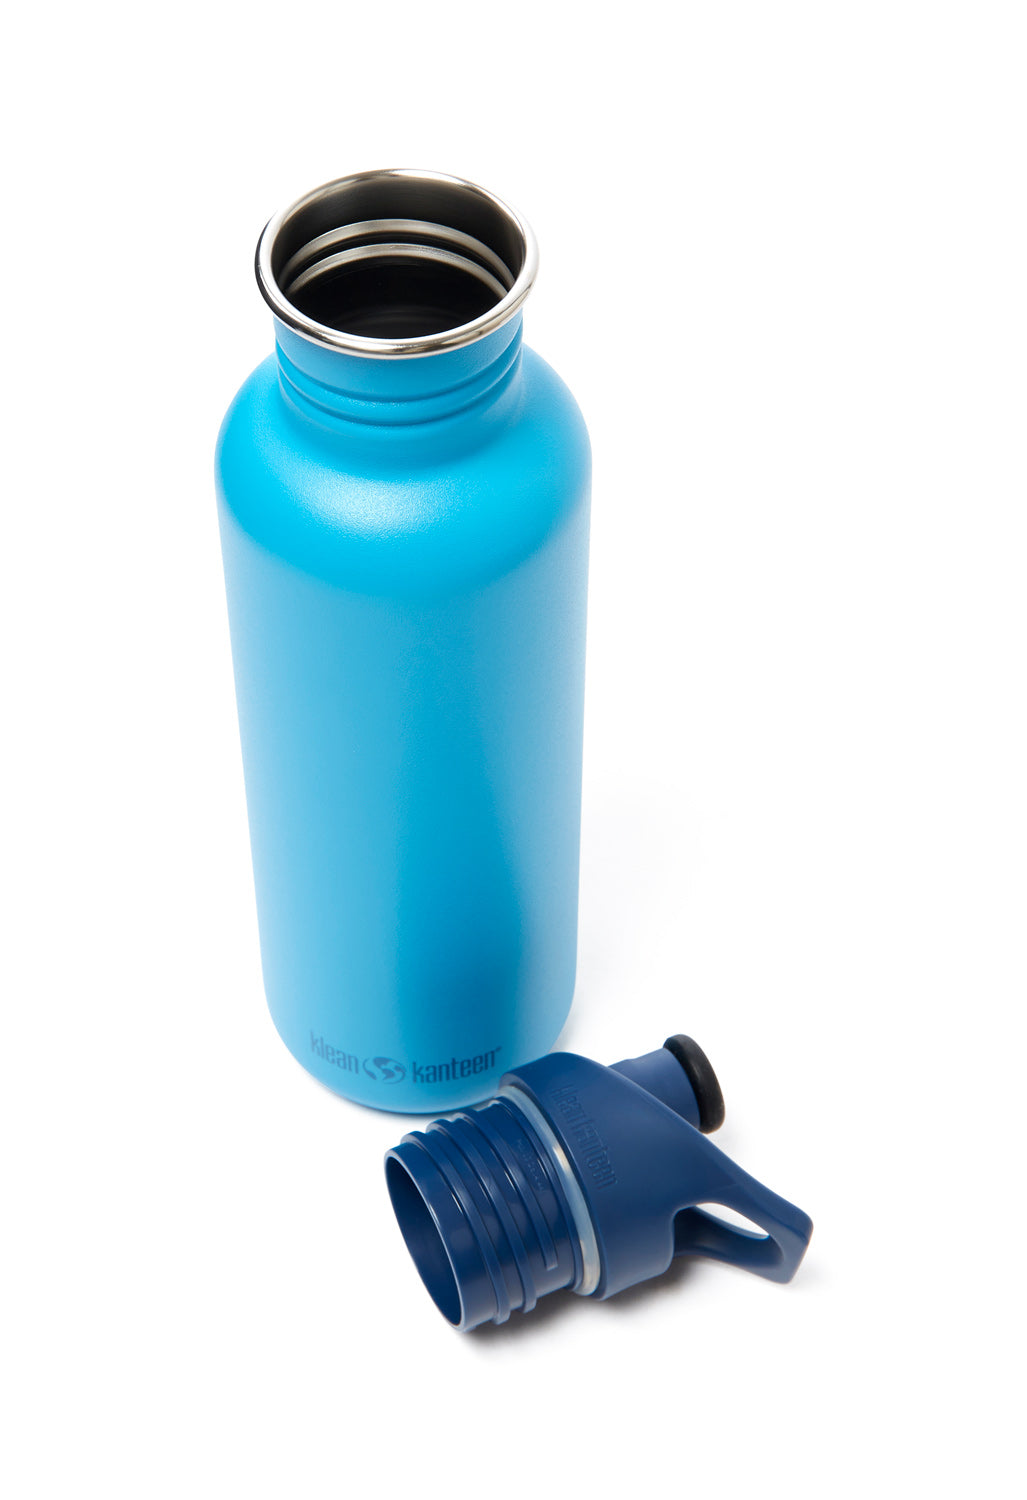 Klean Kanteen® Stainless Steel 12 oz Water Bottle